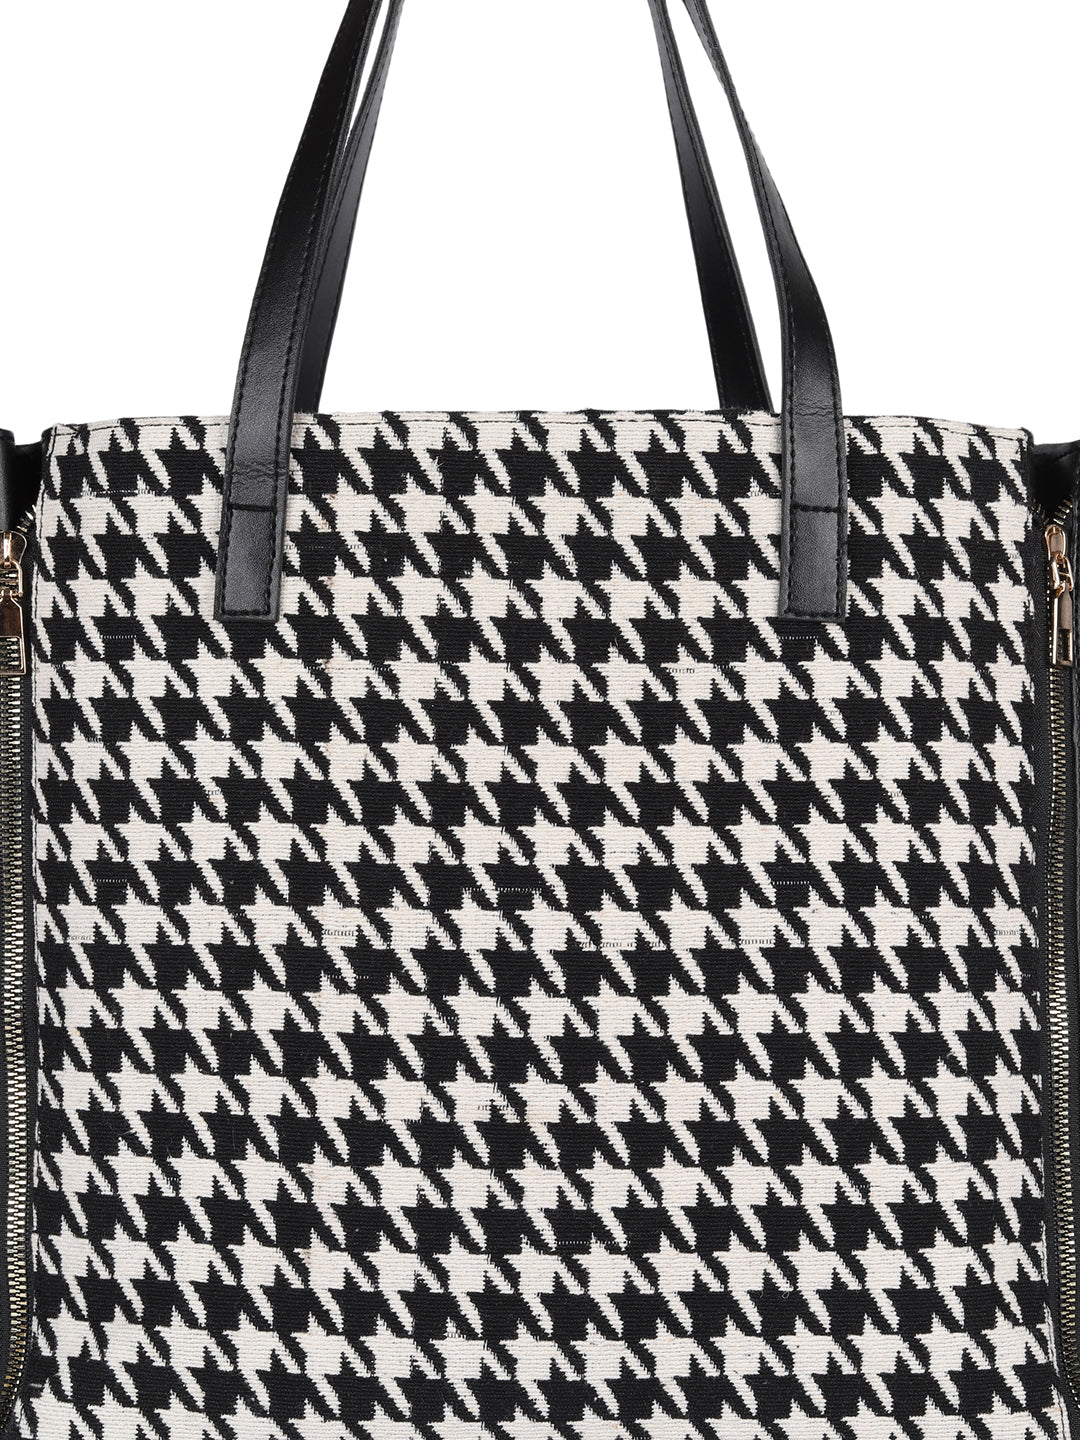 MINI WESST Black And White Textured Tote Bag(MWTB086PR)